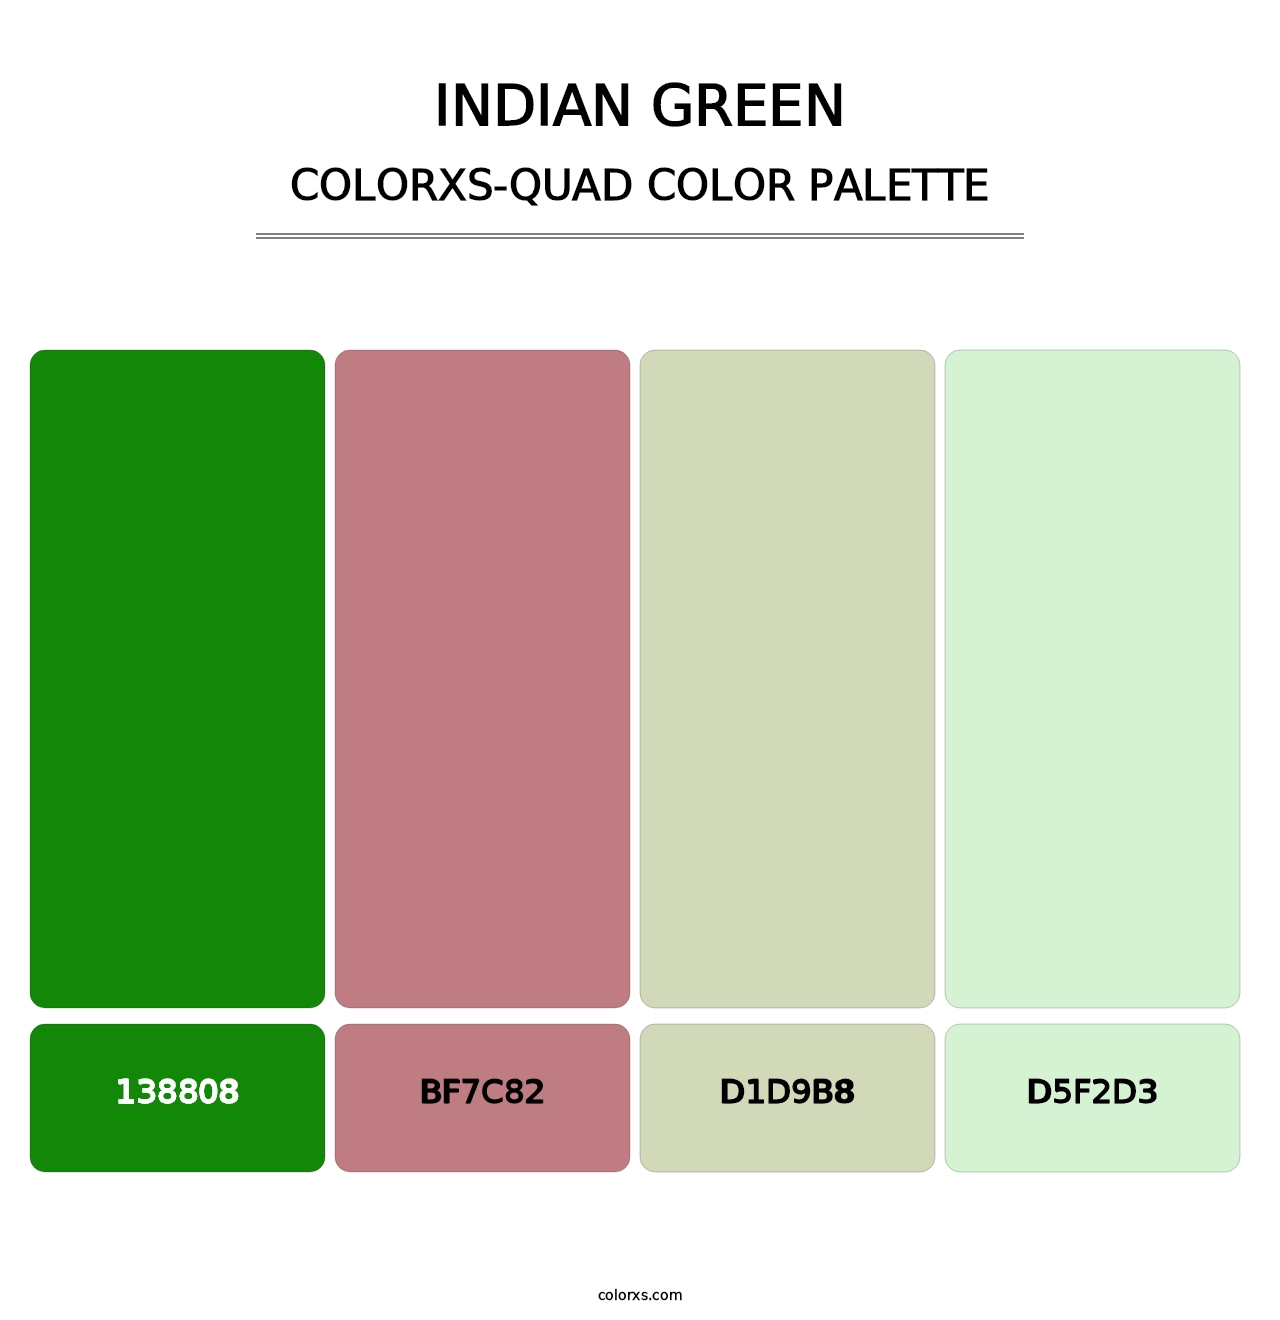 Indian Green - Colorxs Quad Palette